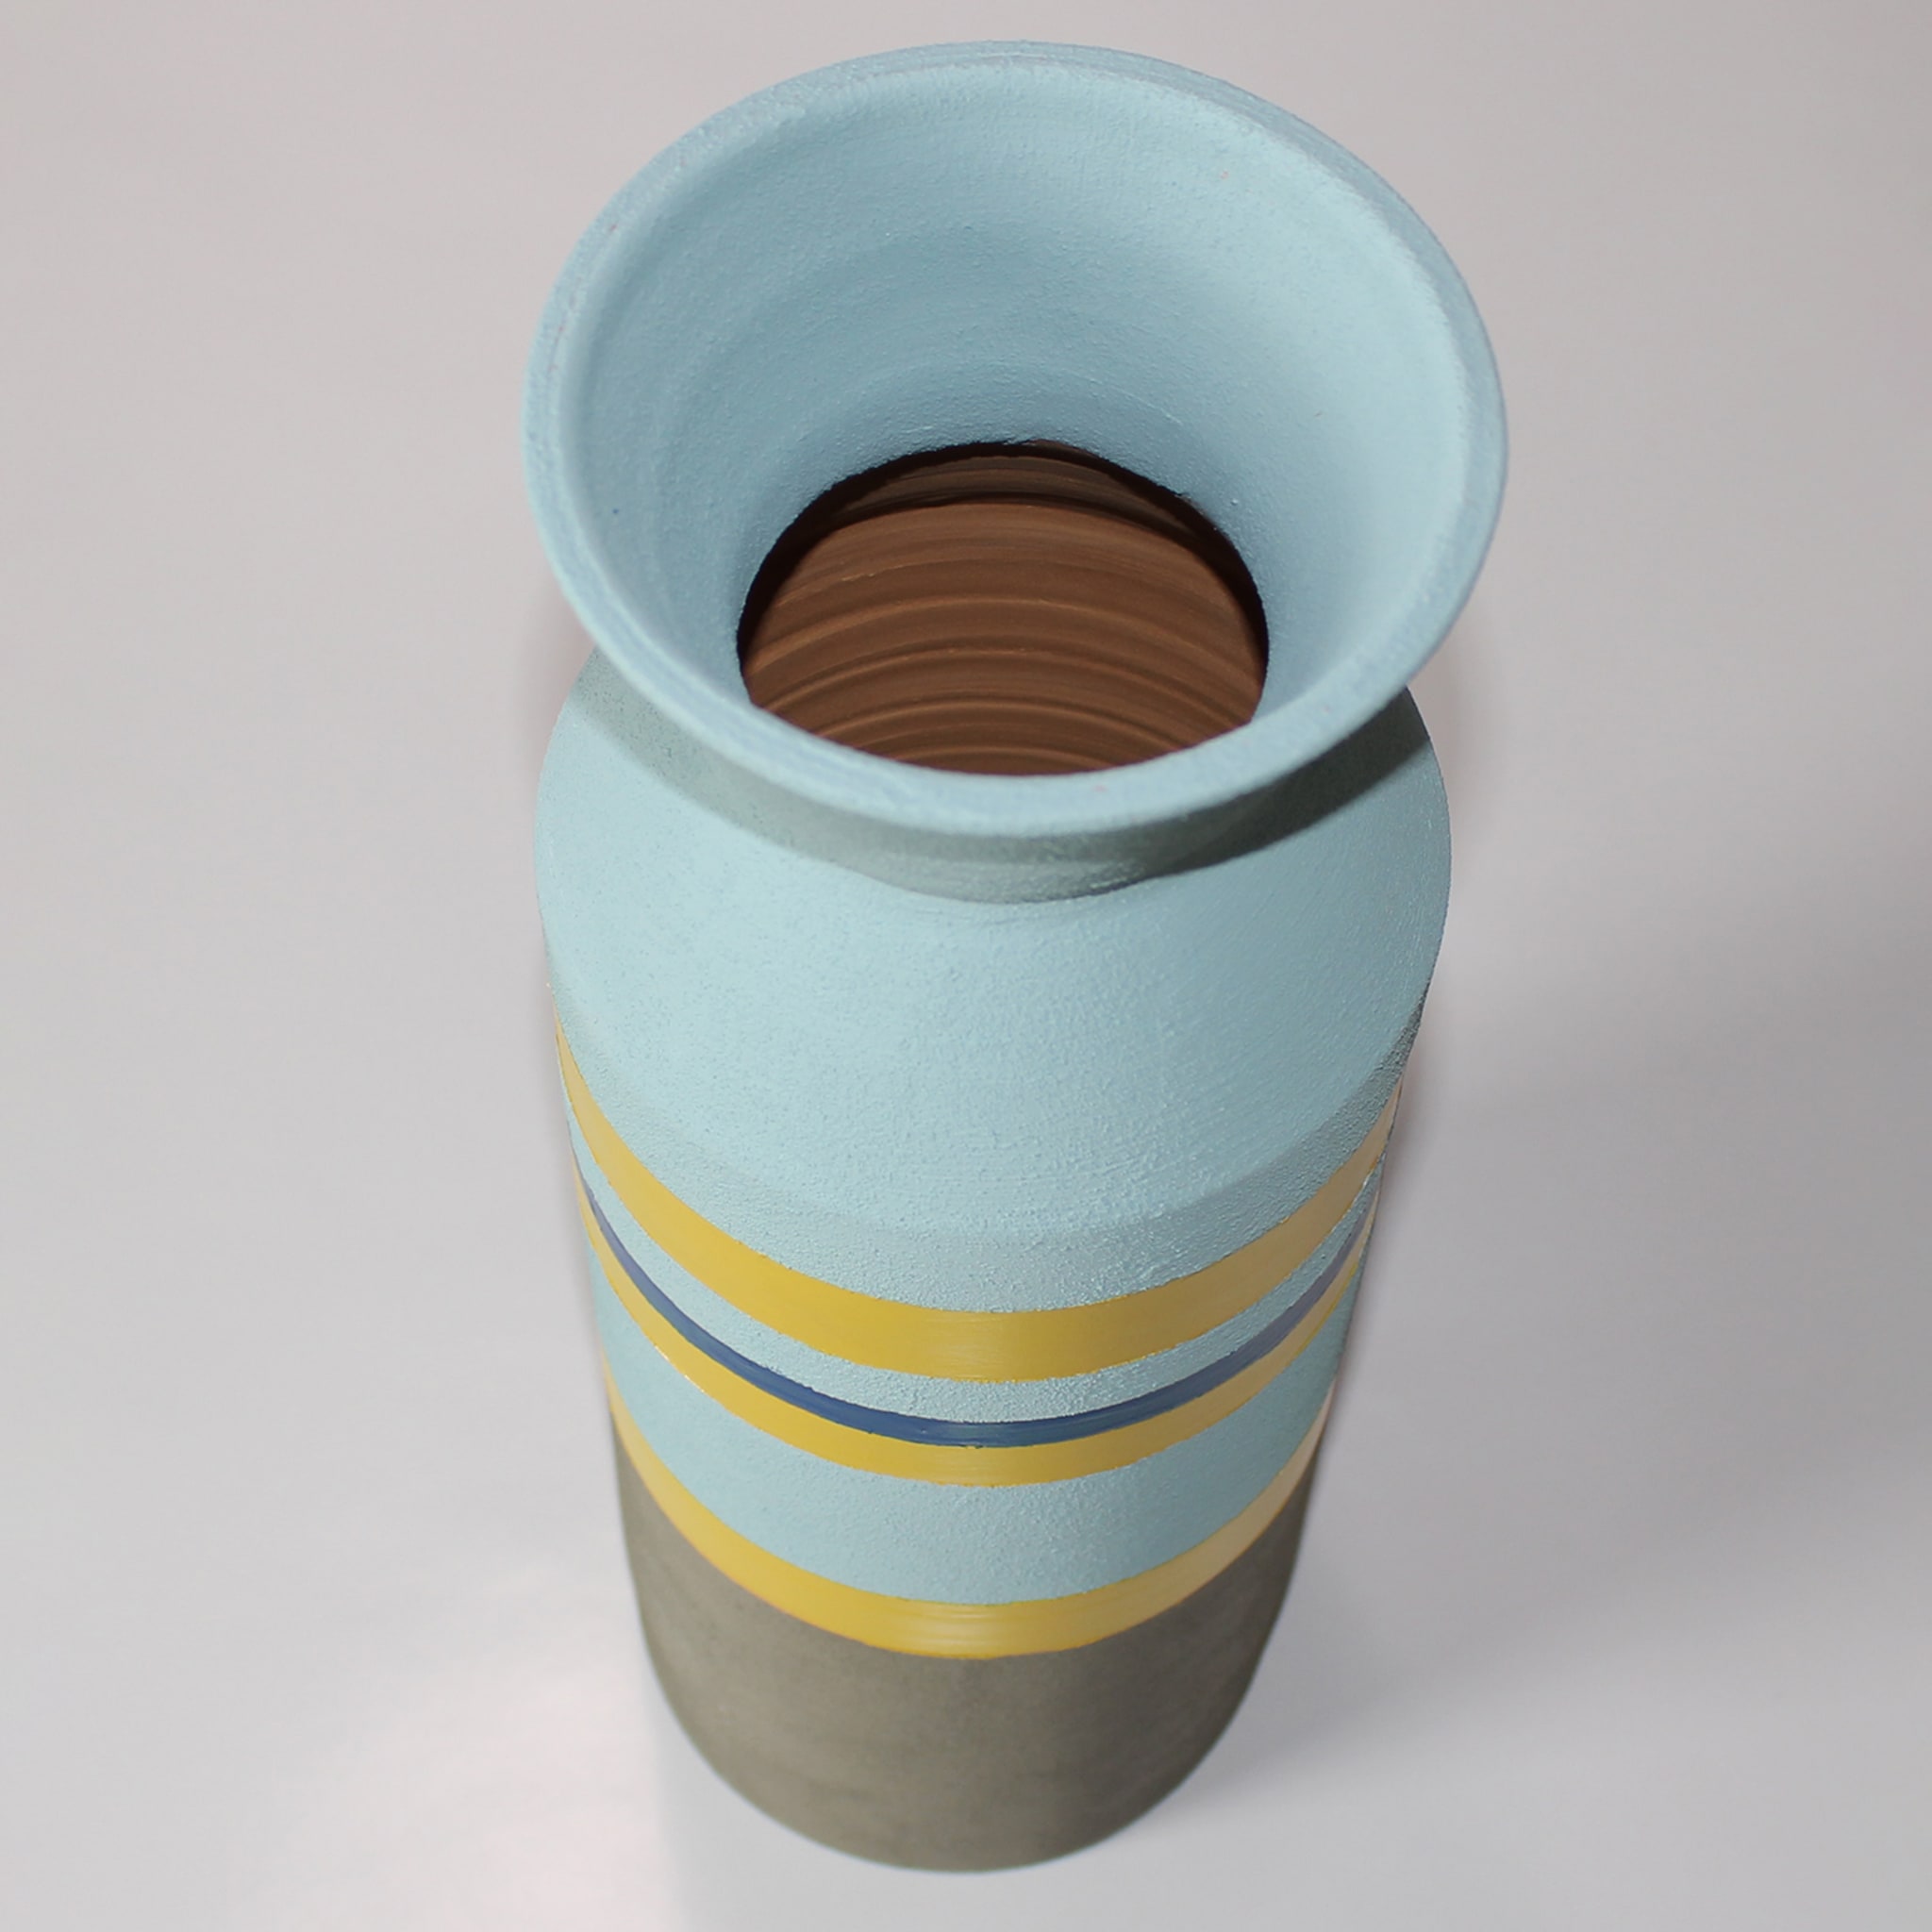 Polychrome Vase 9 by Mascia Meccani - Alternative view 3